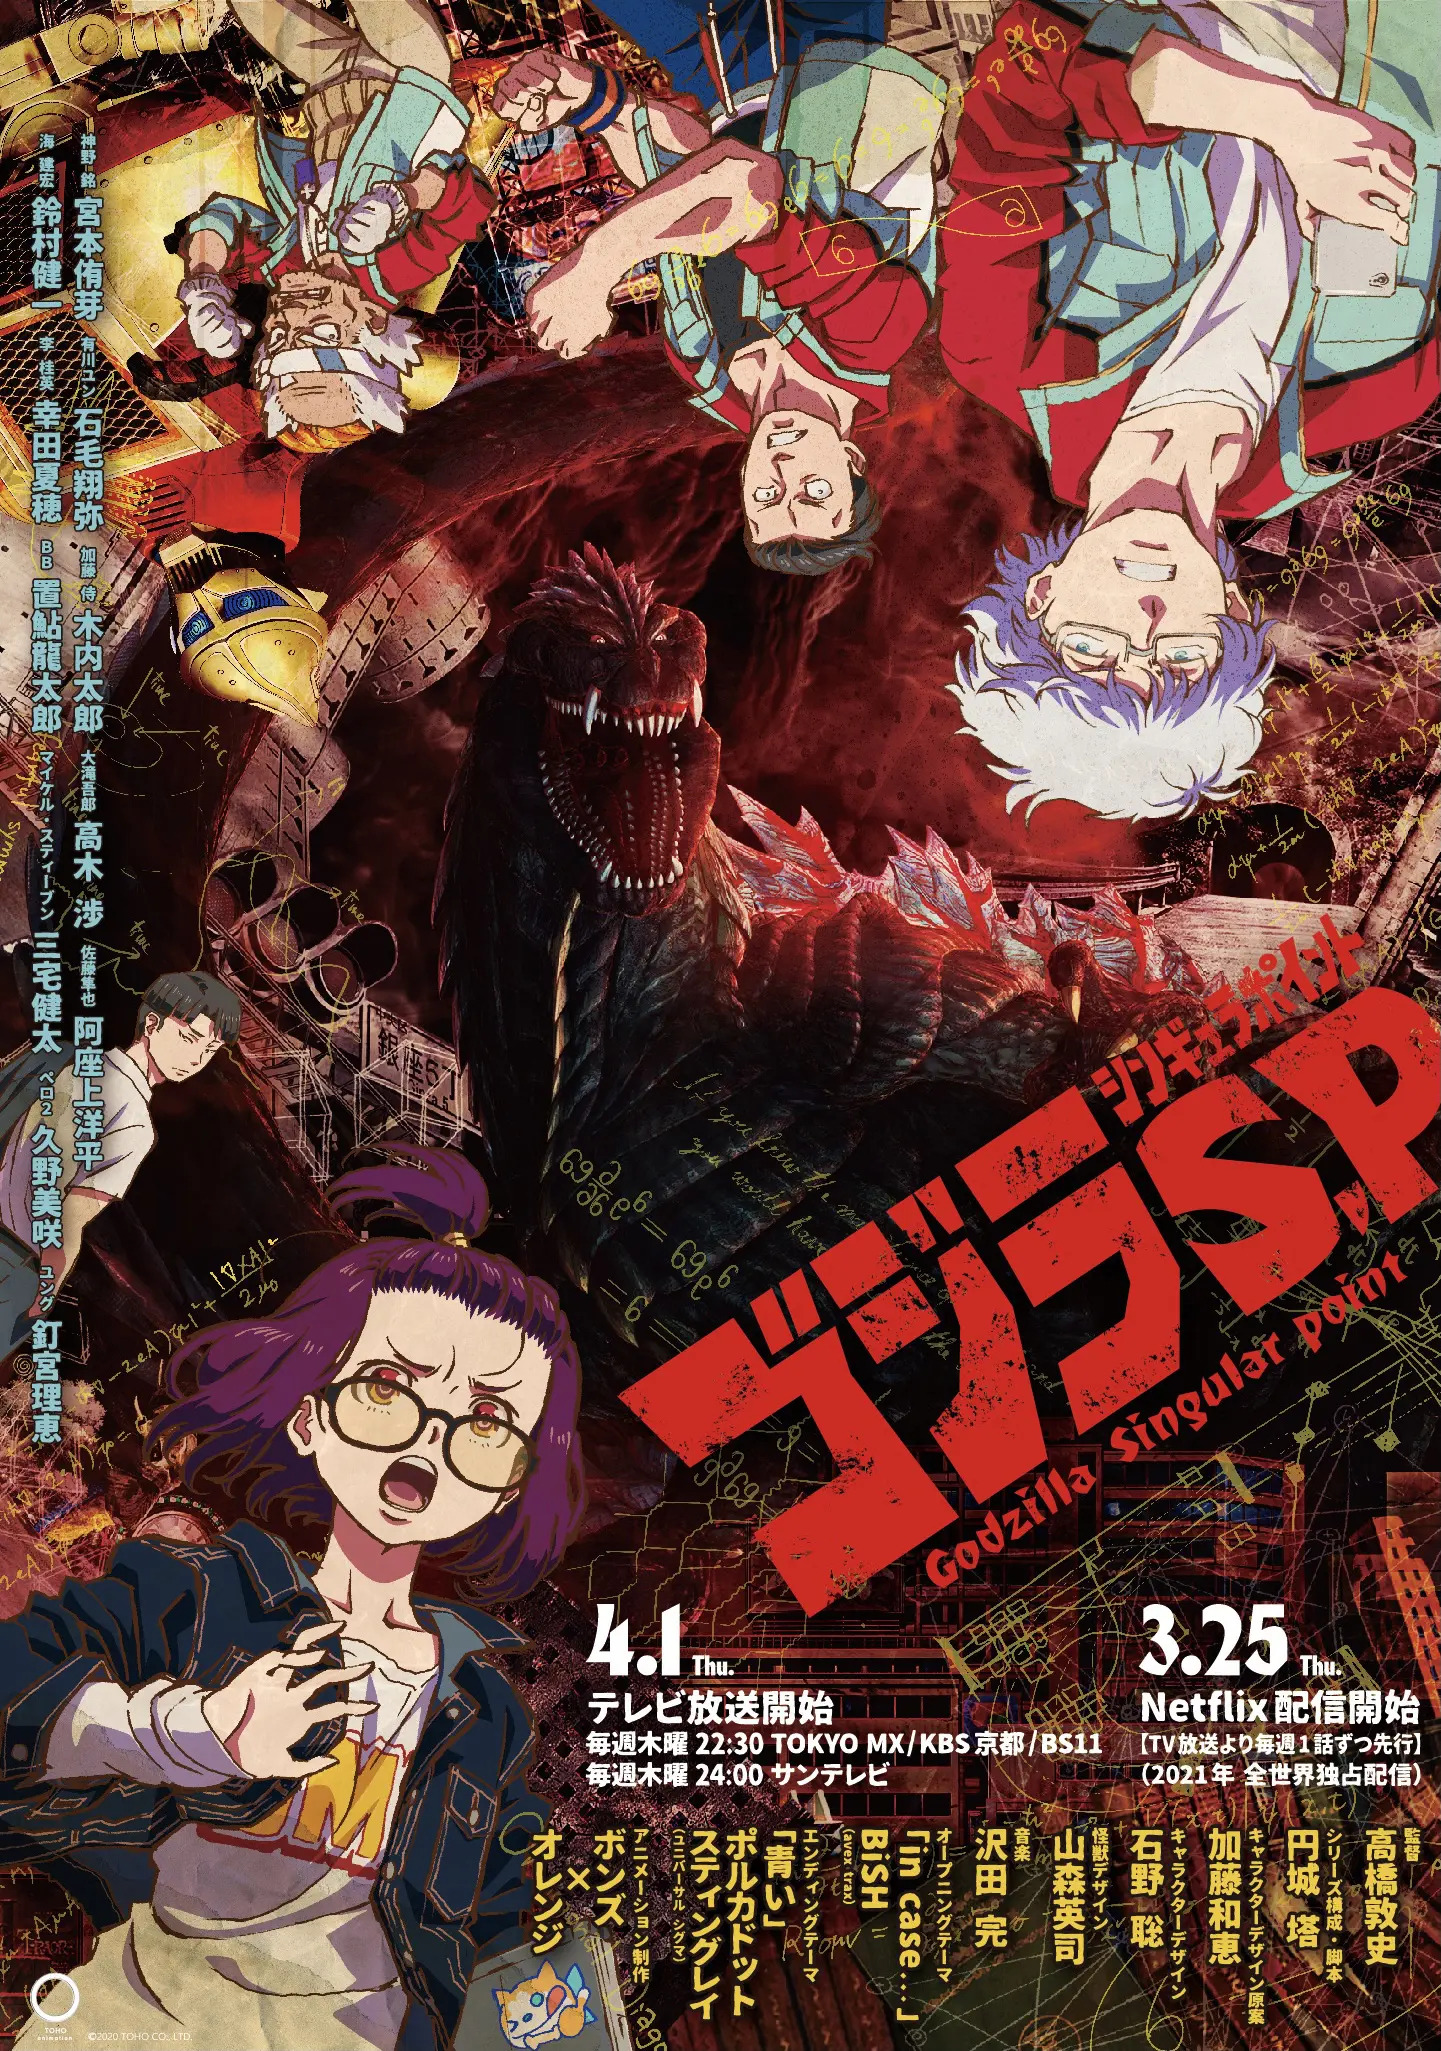 Mega Sized TV Poster Image for Gojira shingyura pointo (#2 of 2)